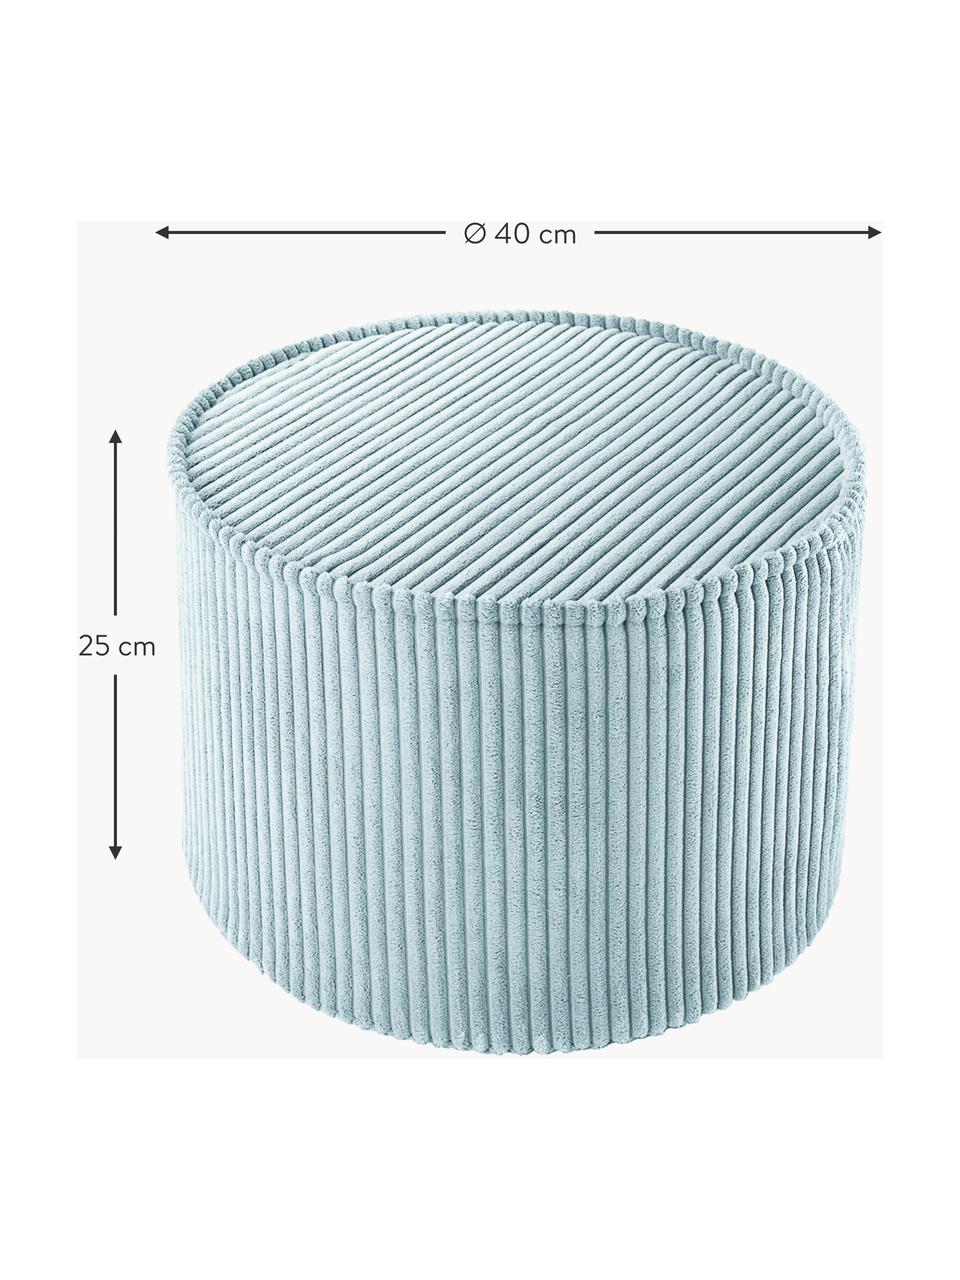 Kinder-Pouf Sugar aus Cord, Ø 40 cm, Bezug: Cord (100 % Polyester) au, Cord Hellblau, Ø 40 x H 25 cm